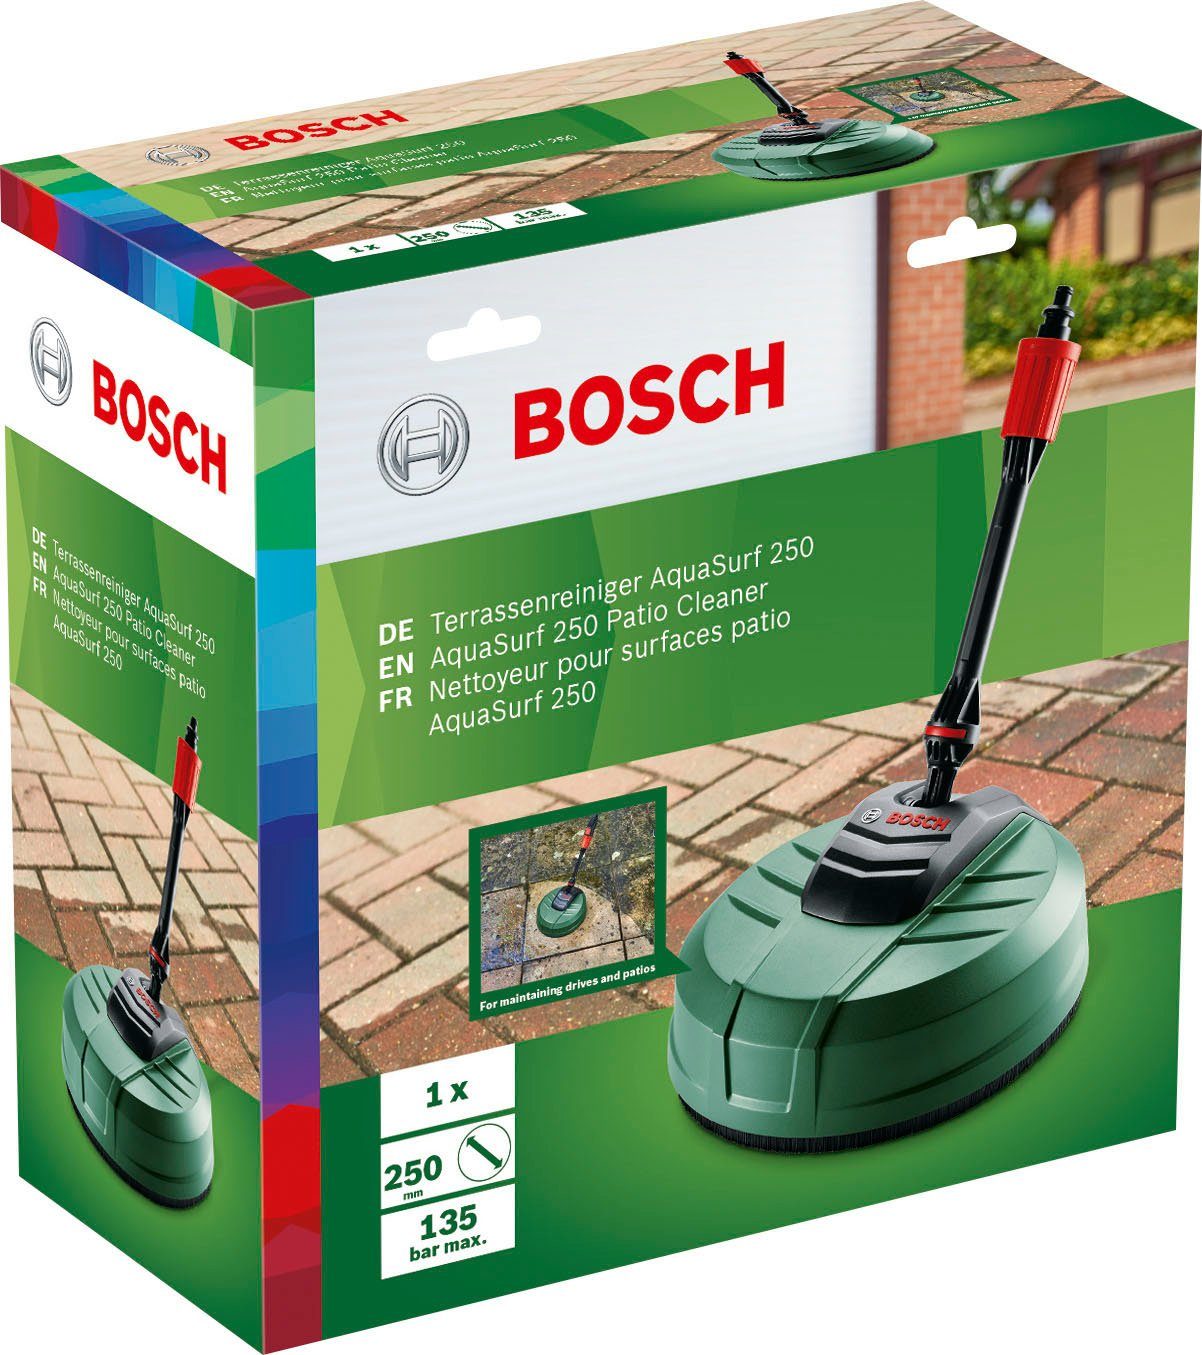 250 Flächenreiniger & Bosch Aquasurf Terrassenreiniger Home Garden